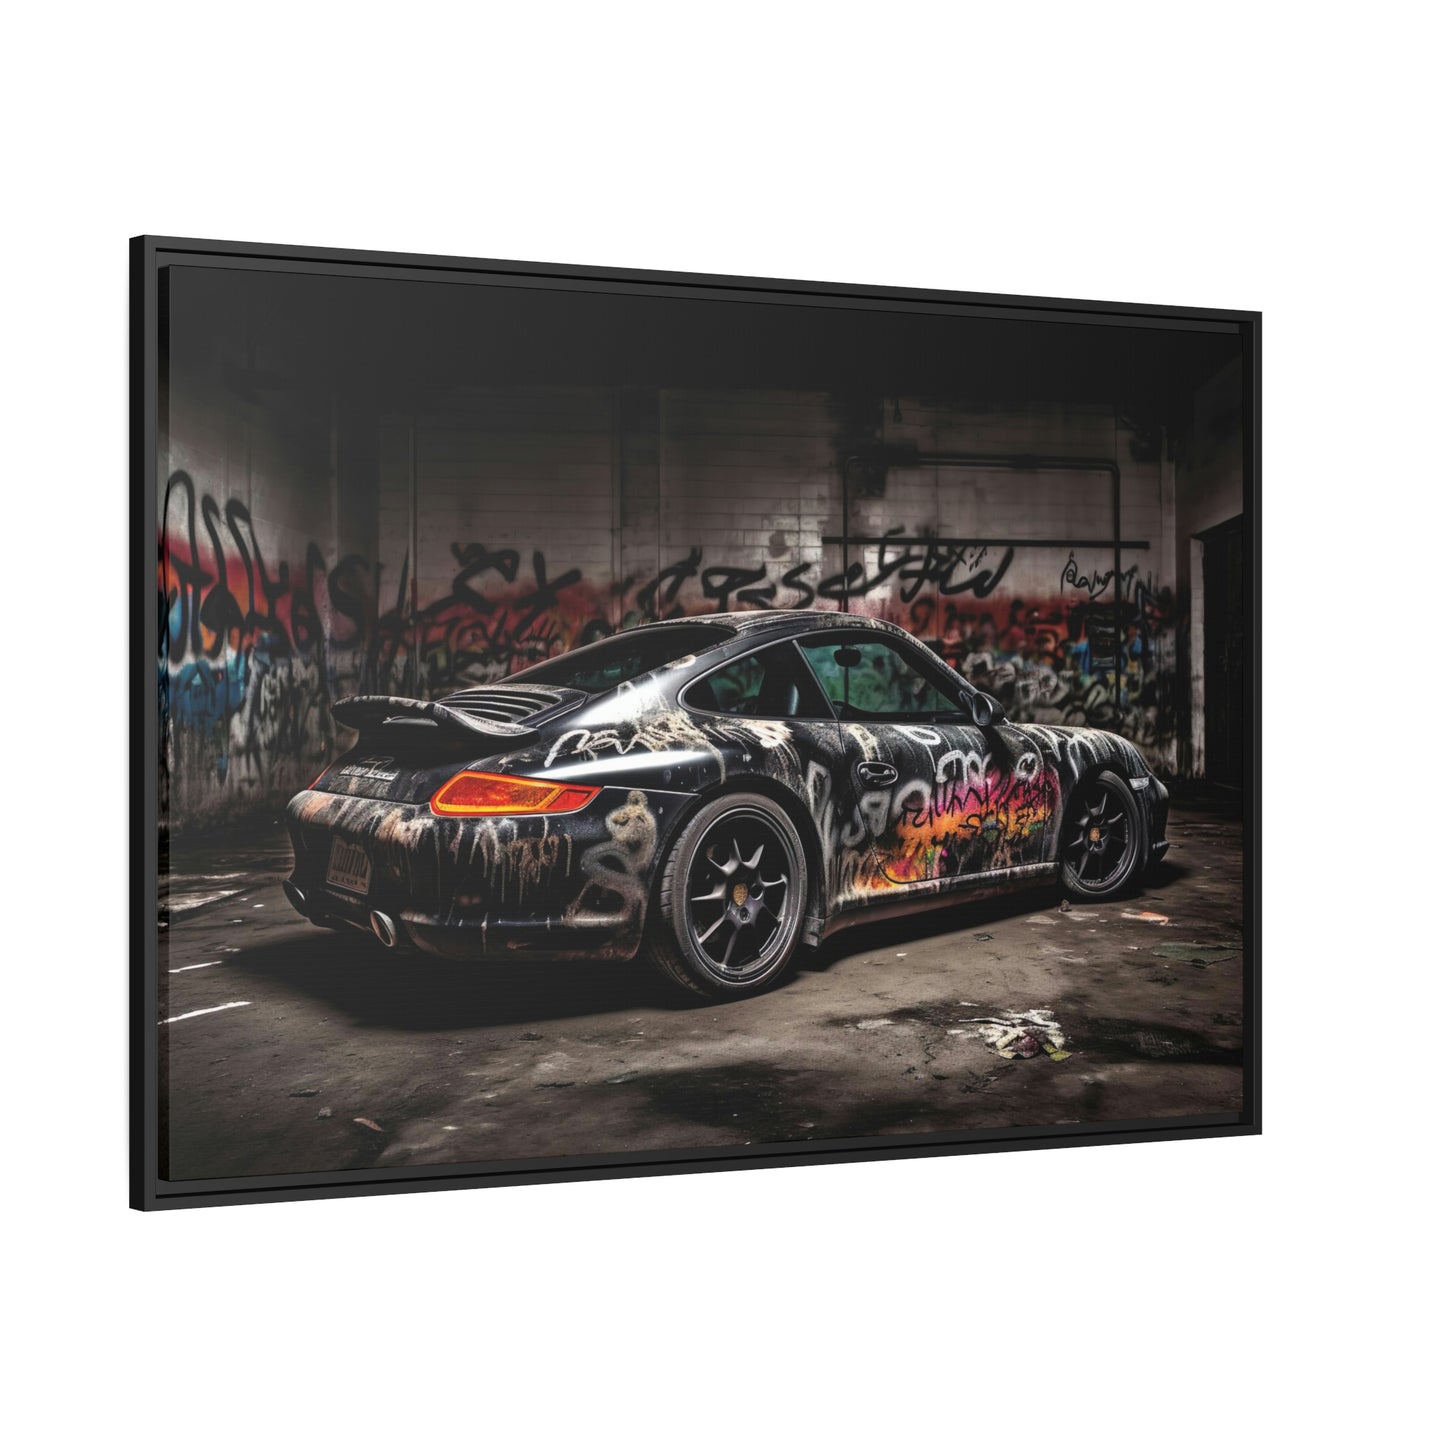 Porsche 911 Graffiti Garage